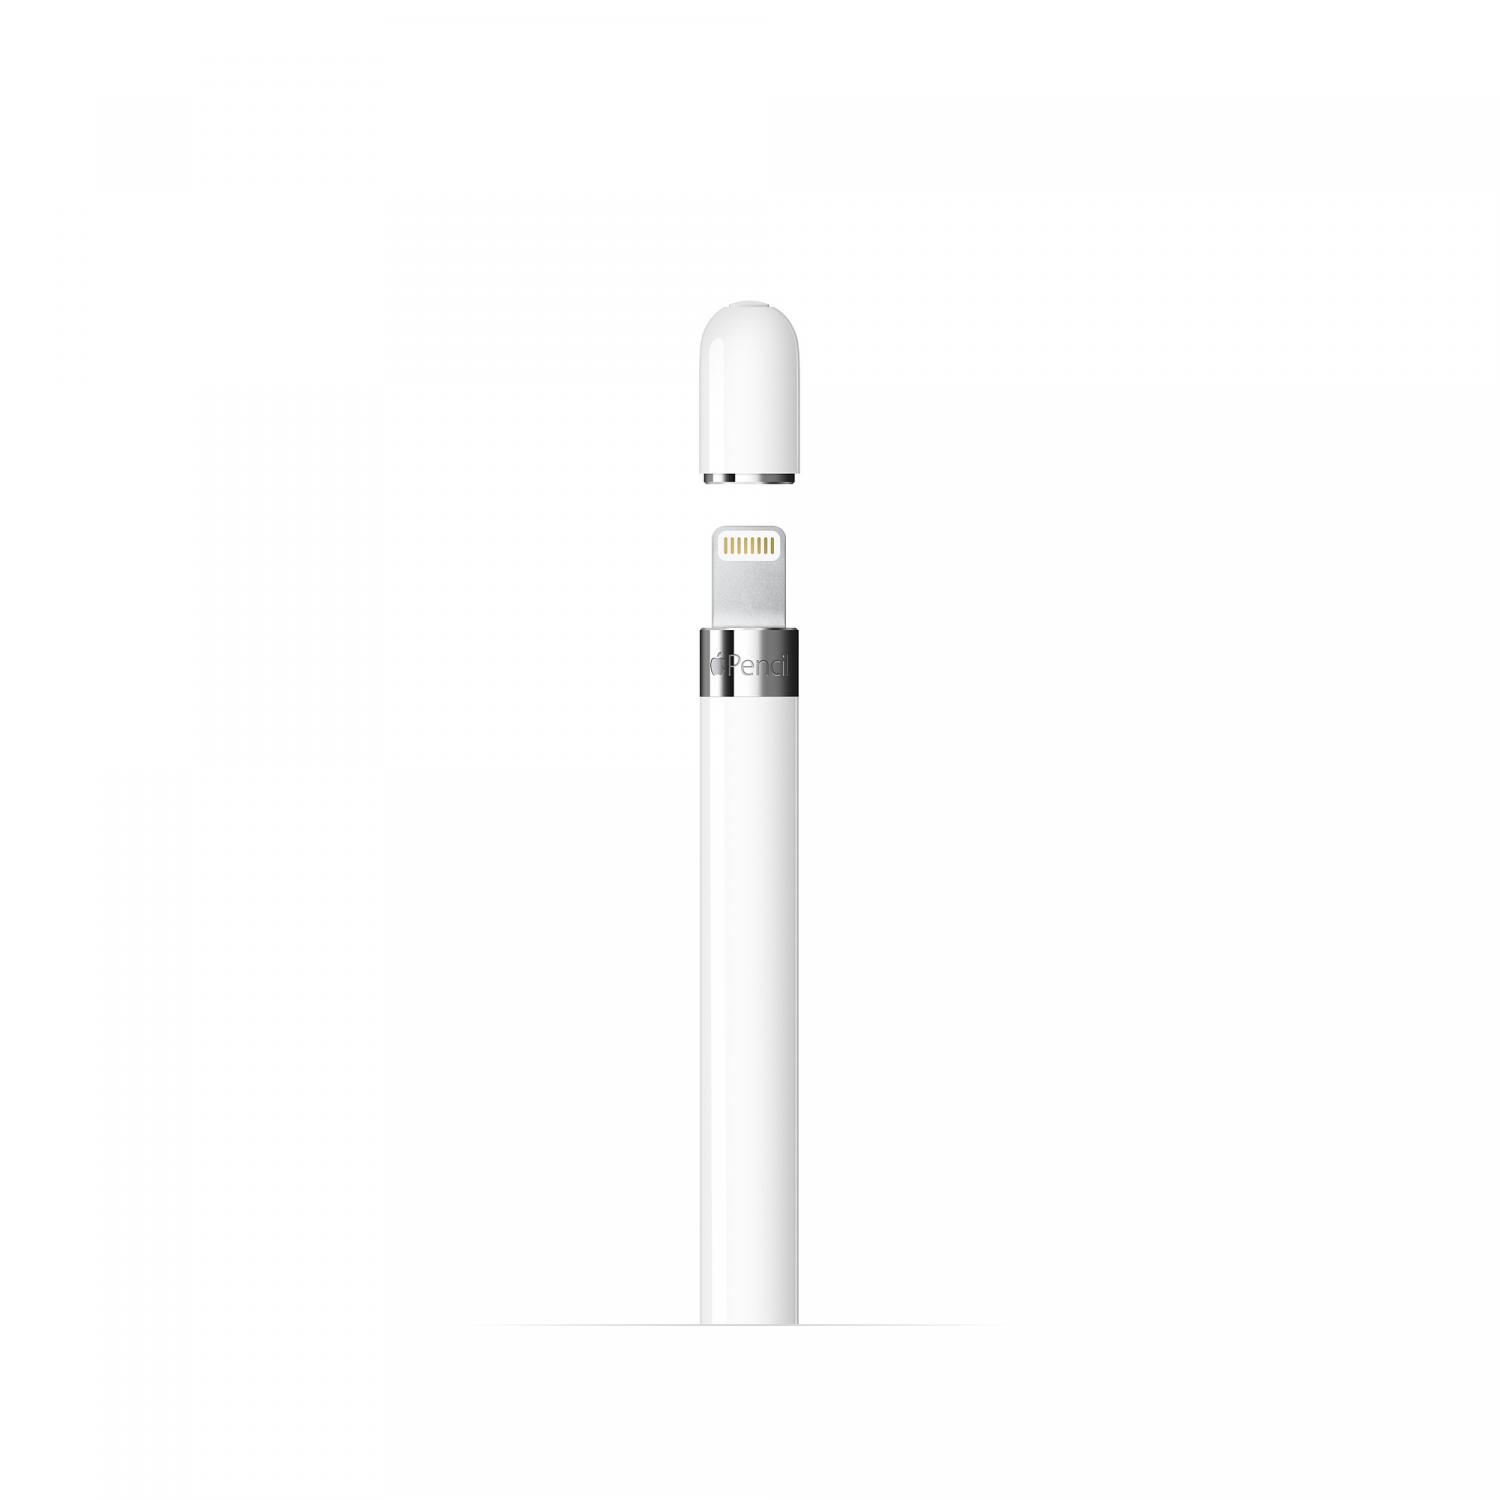 Apple - MK0C2AM/A - Apple Pencil (1st Generation) - White